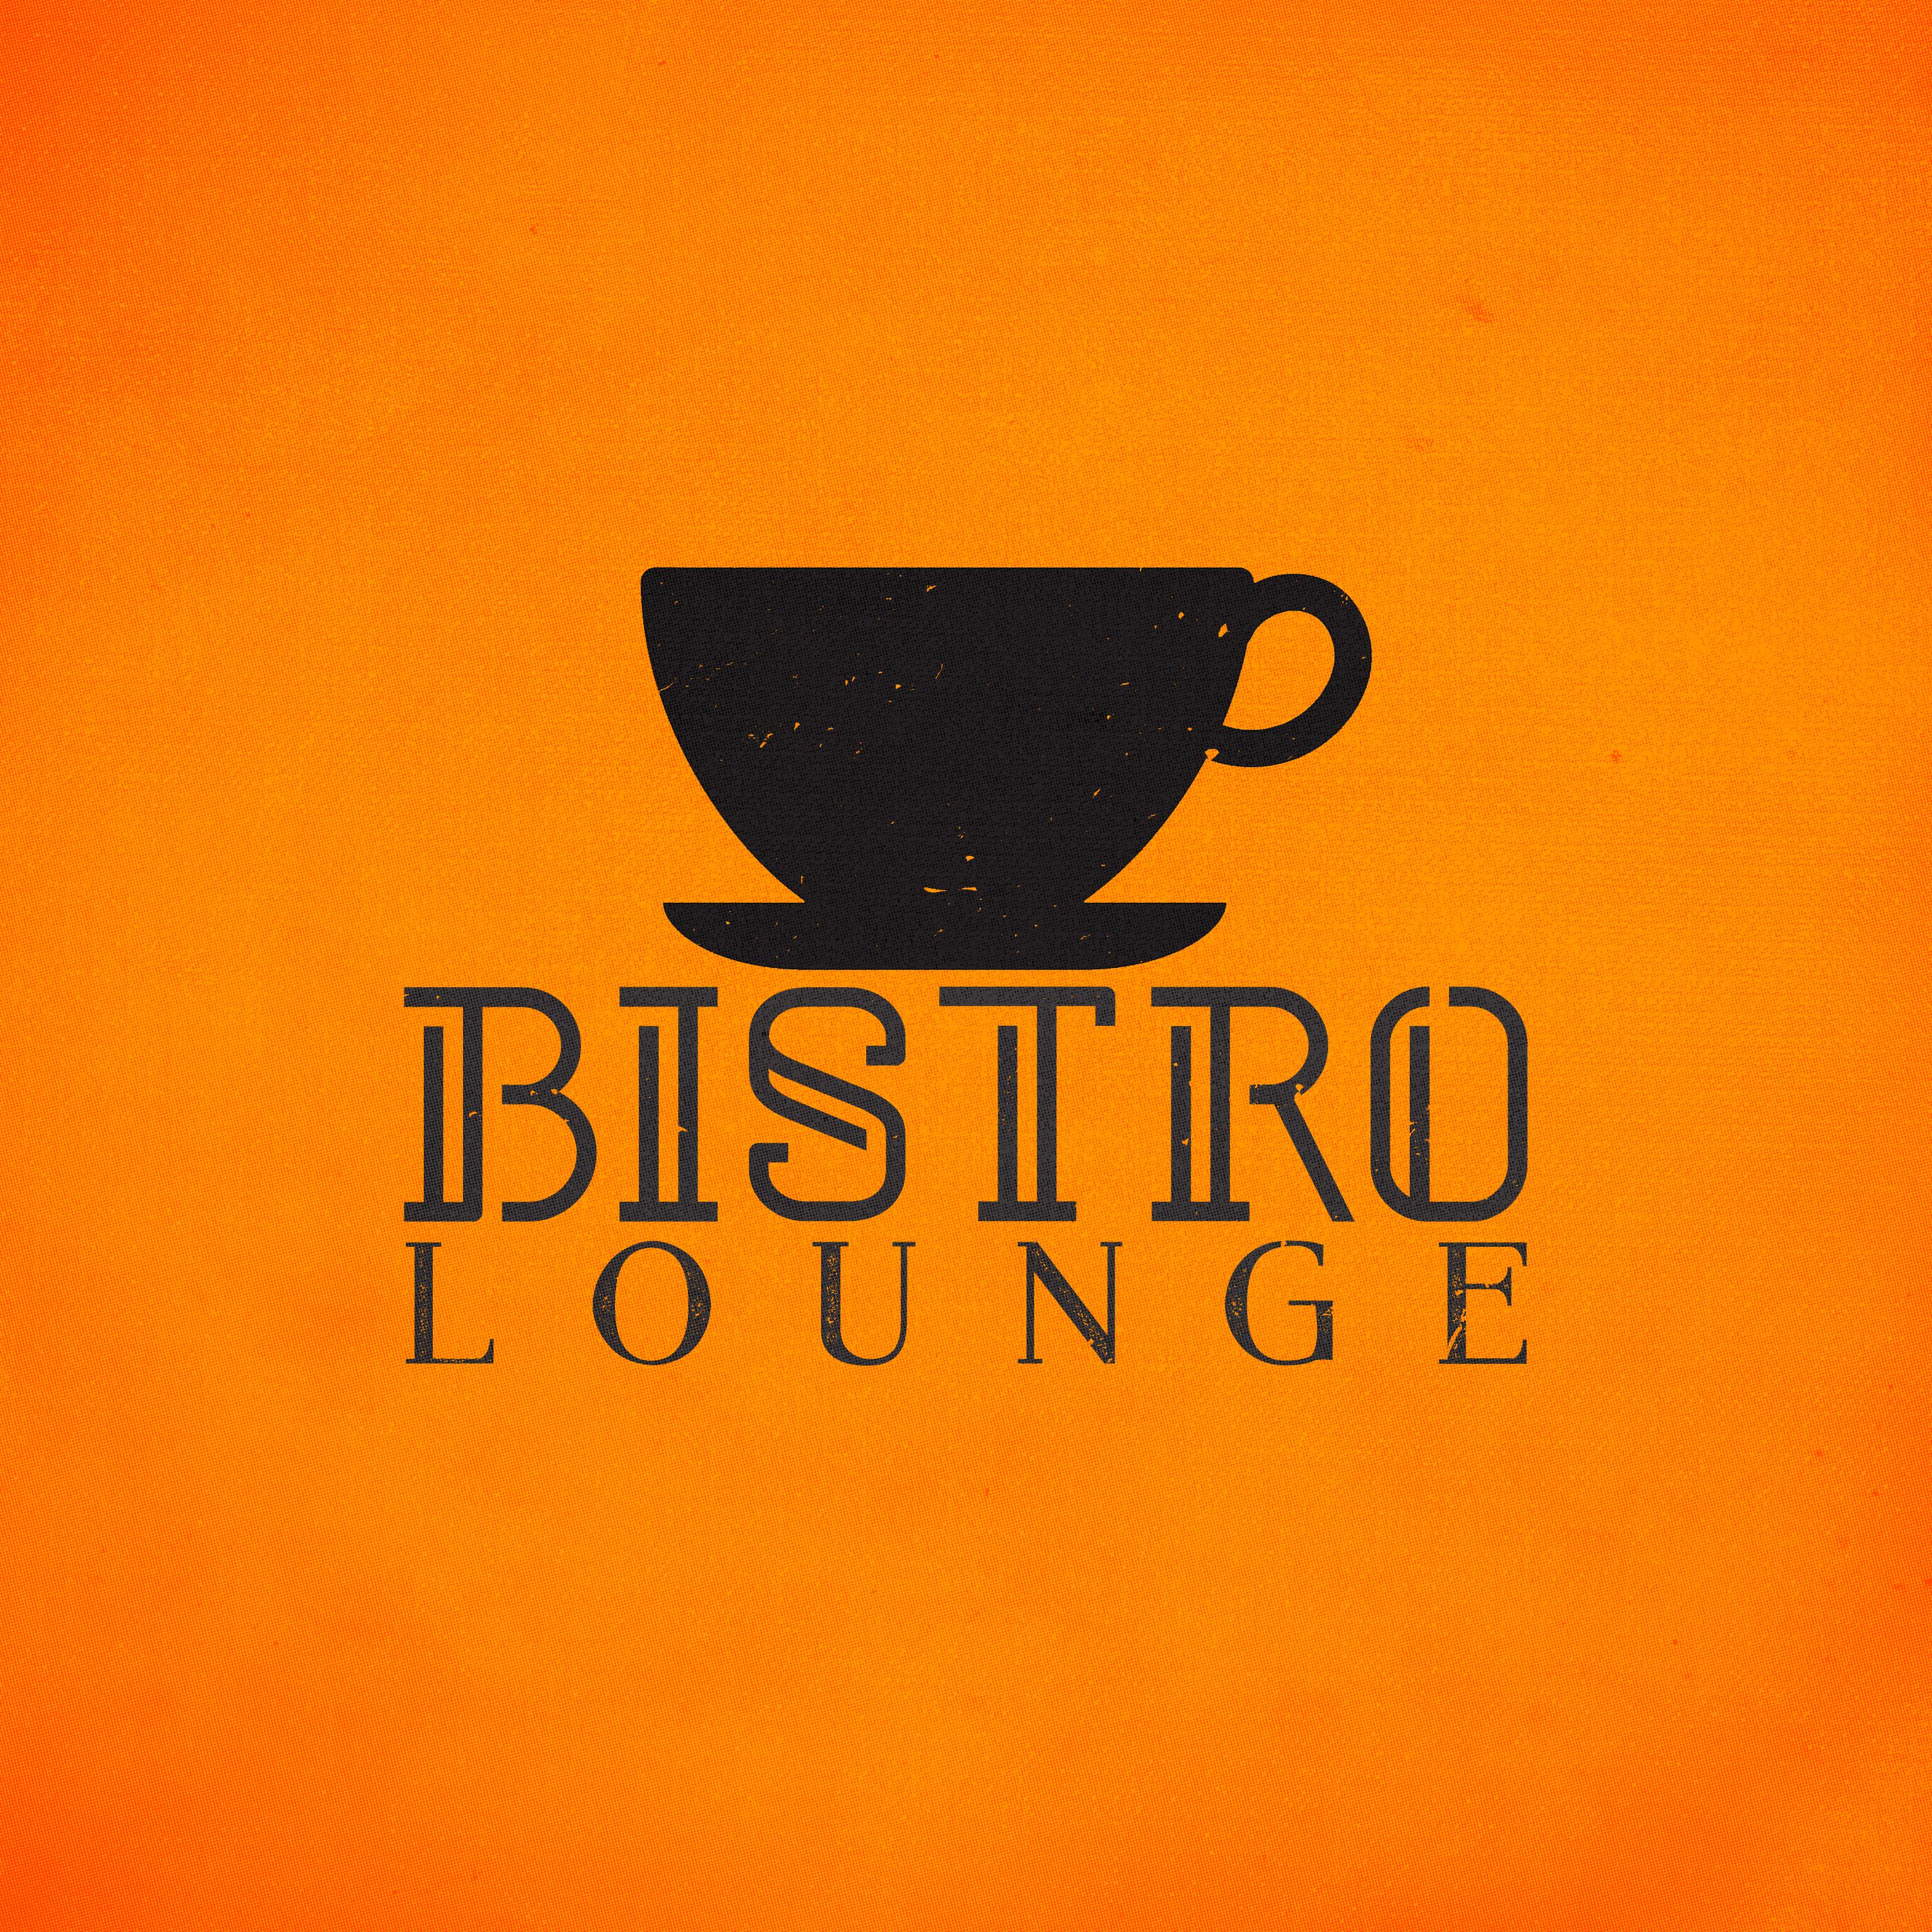 Bistro Lounge